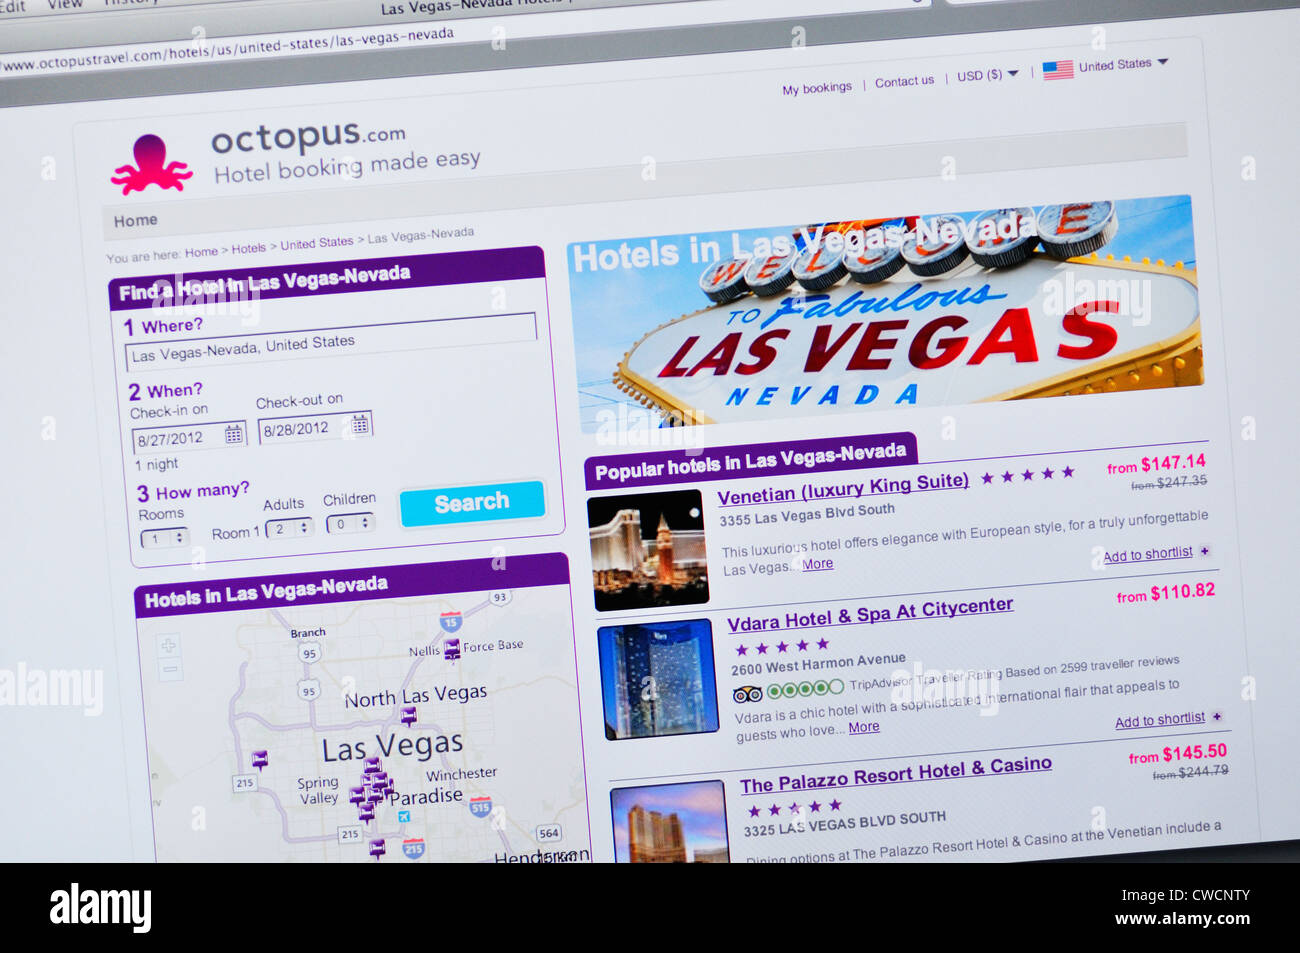 Octopus Travel website - Las Vegas hotel search Stock Photo